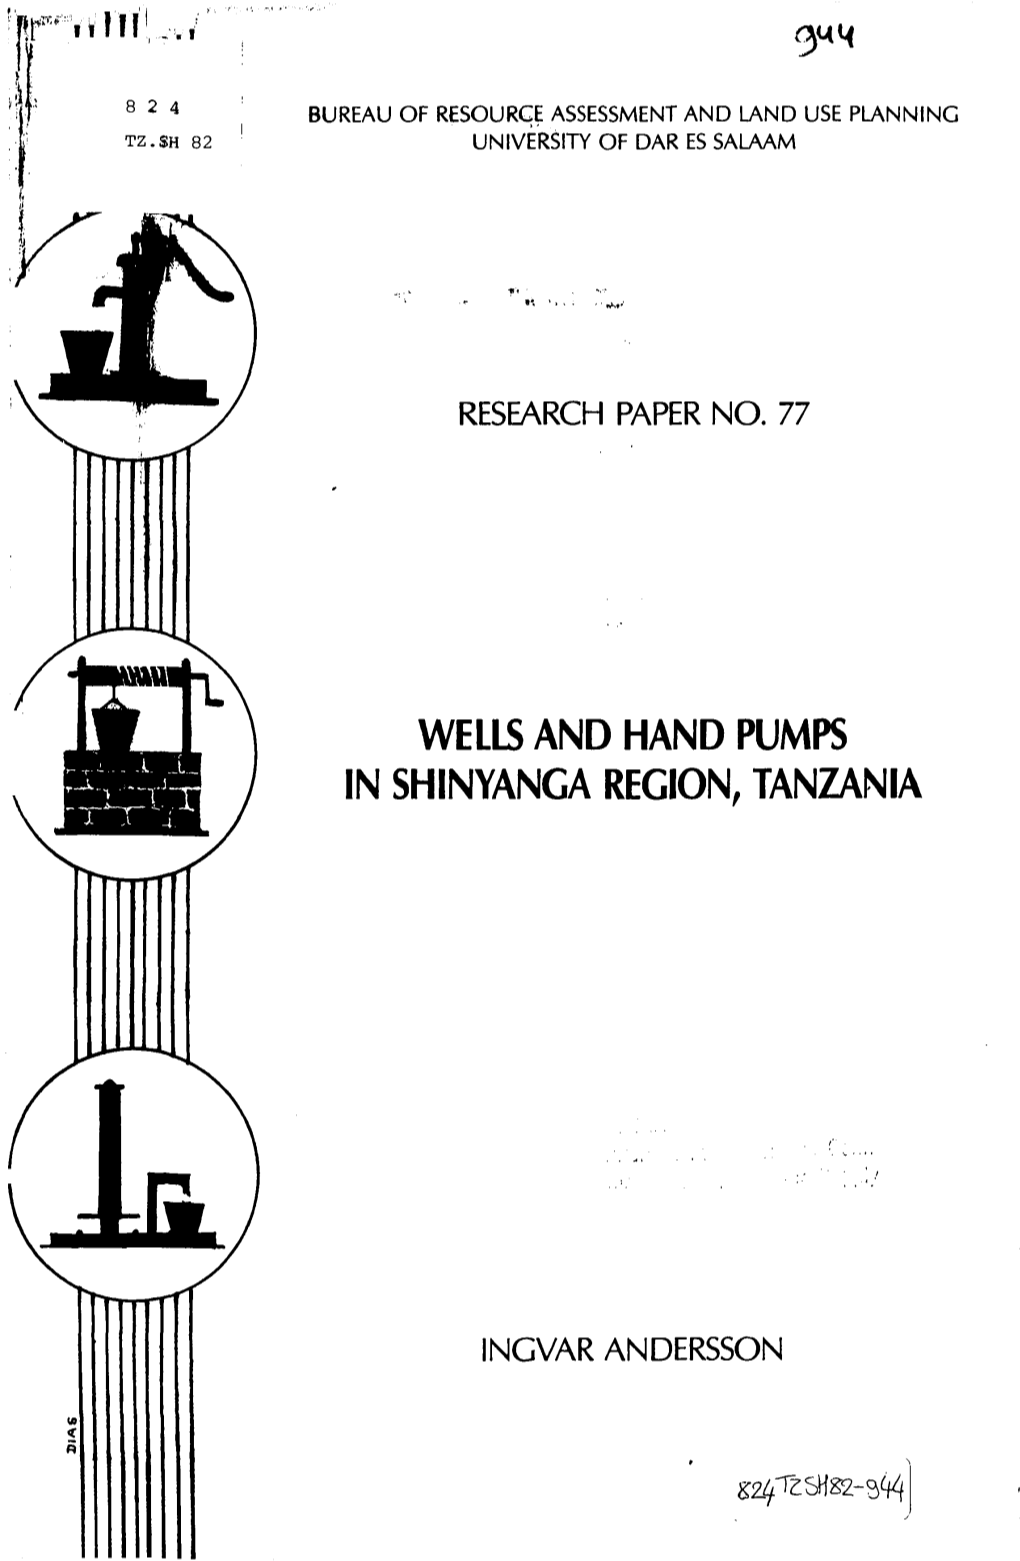 Wells and Hand Pumps in Shinyanga Region, Tanzania